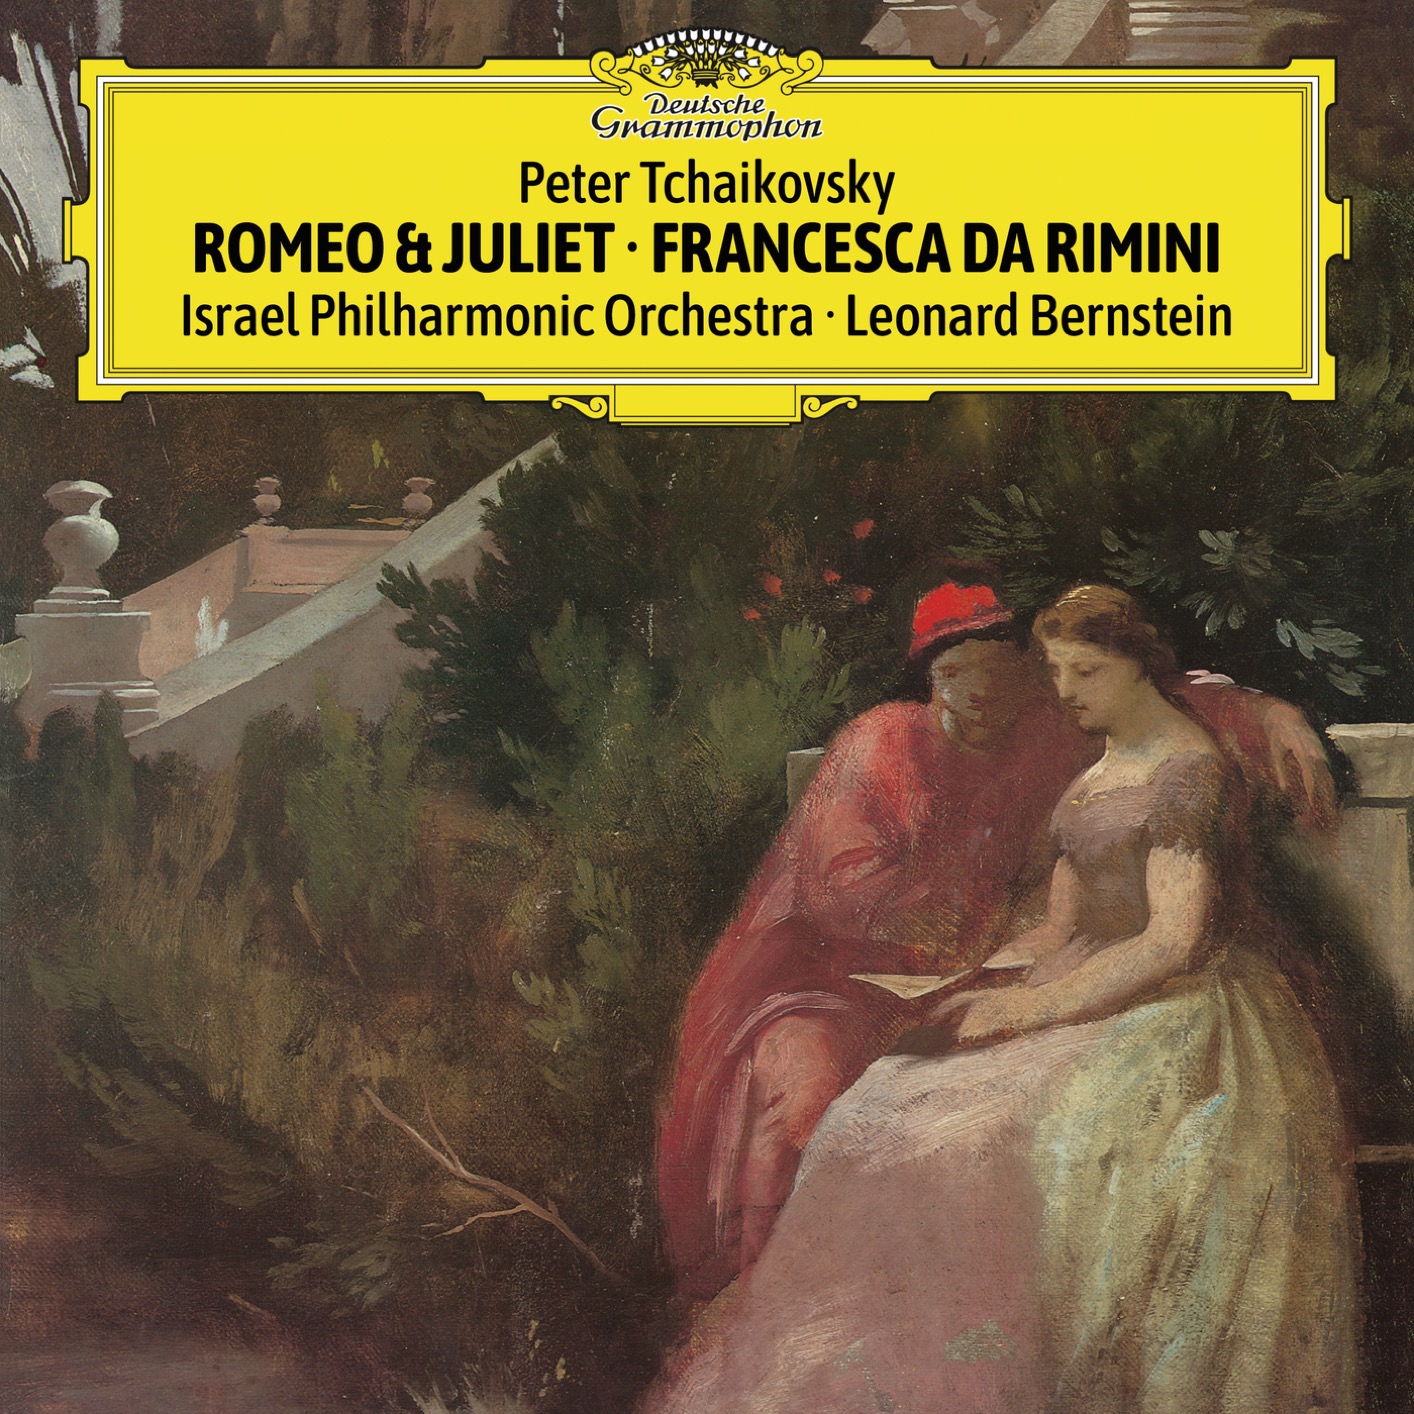 Israel Philharmonic Orchestra & Leonard Bernstein – Tchaikovsky: Romeo & Juliet, Francesca da Rimini (Live) (1979/2017) [FLAC 24bit/96kHz]